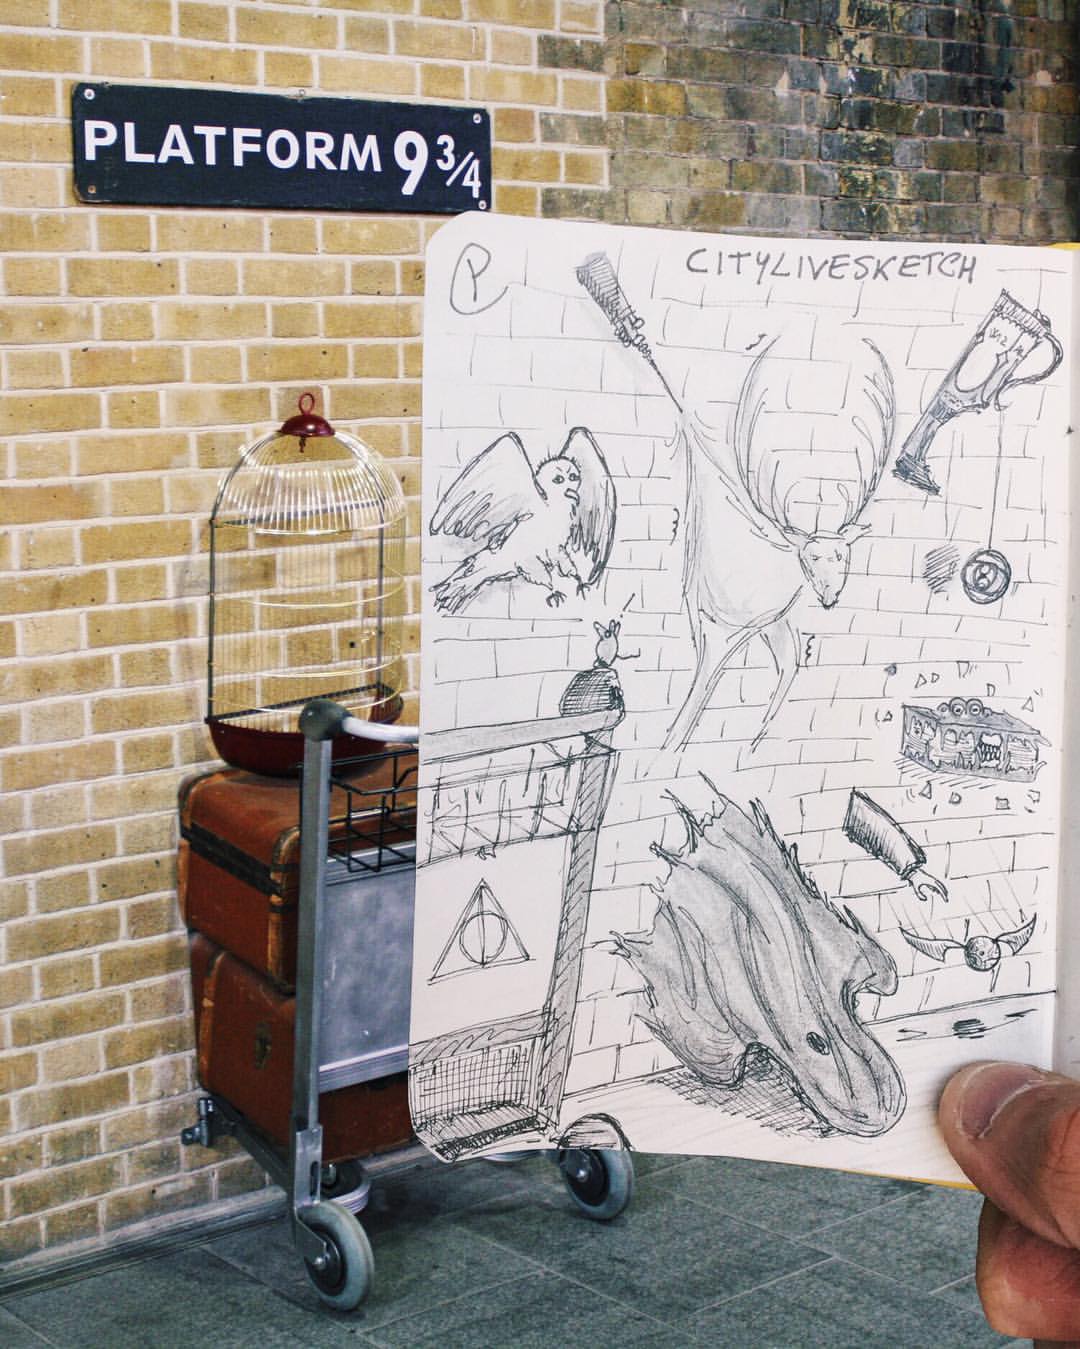 Magic world in London, Platform 9 3/4